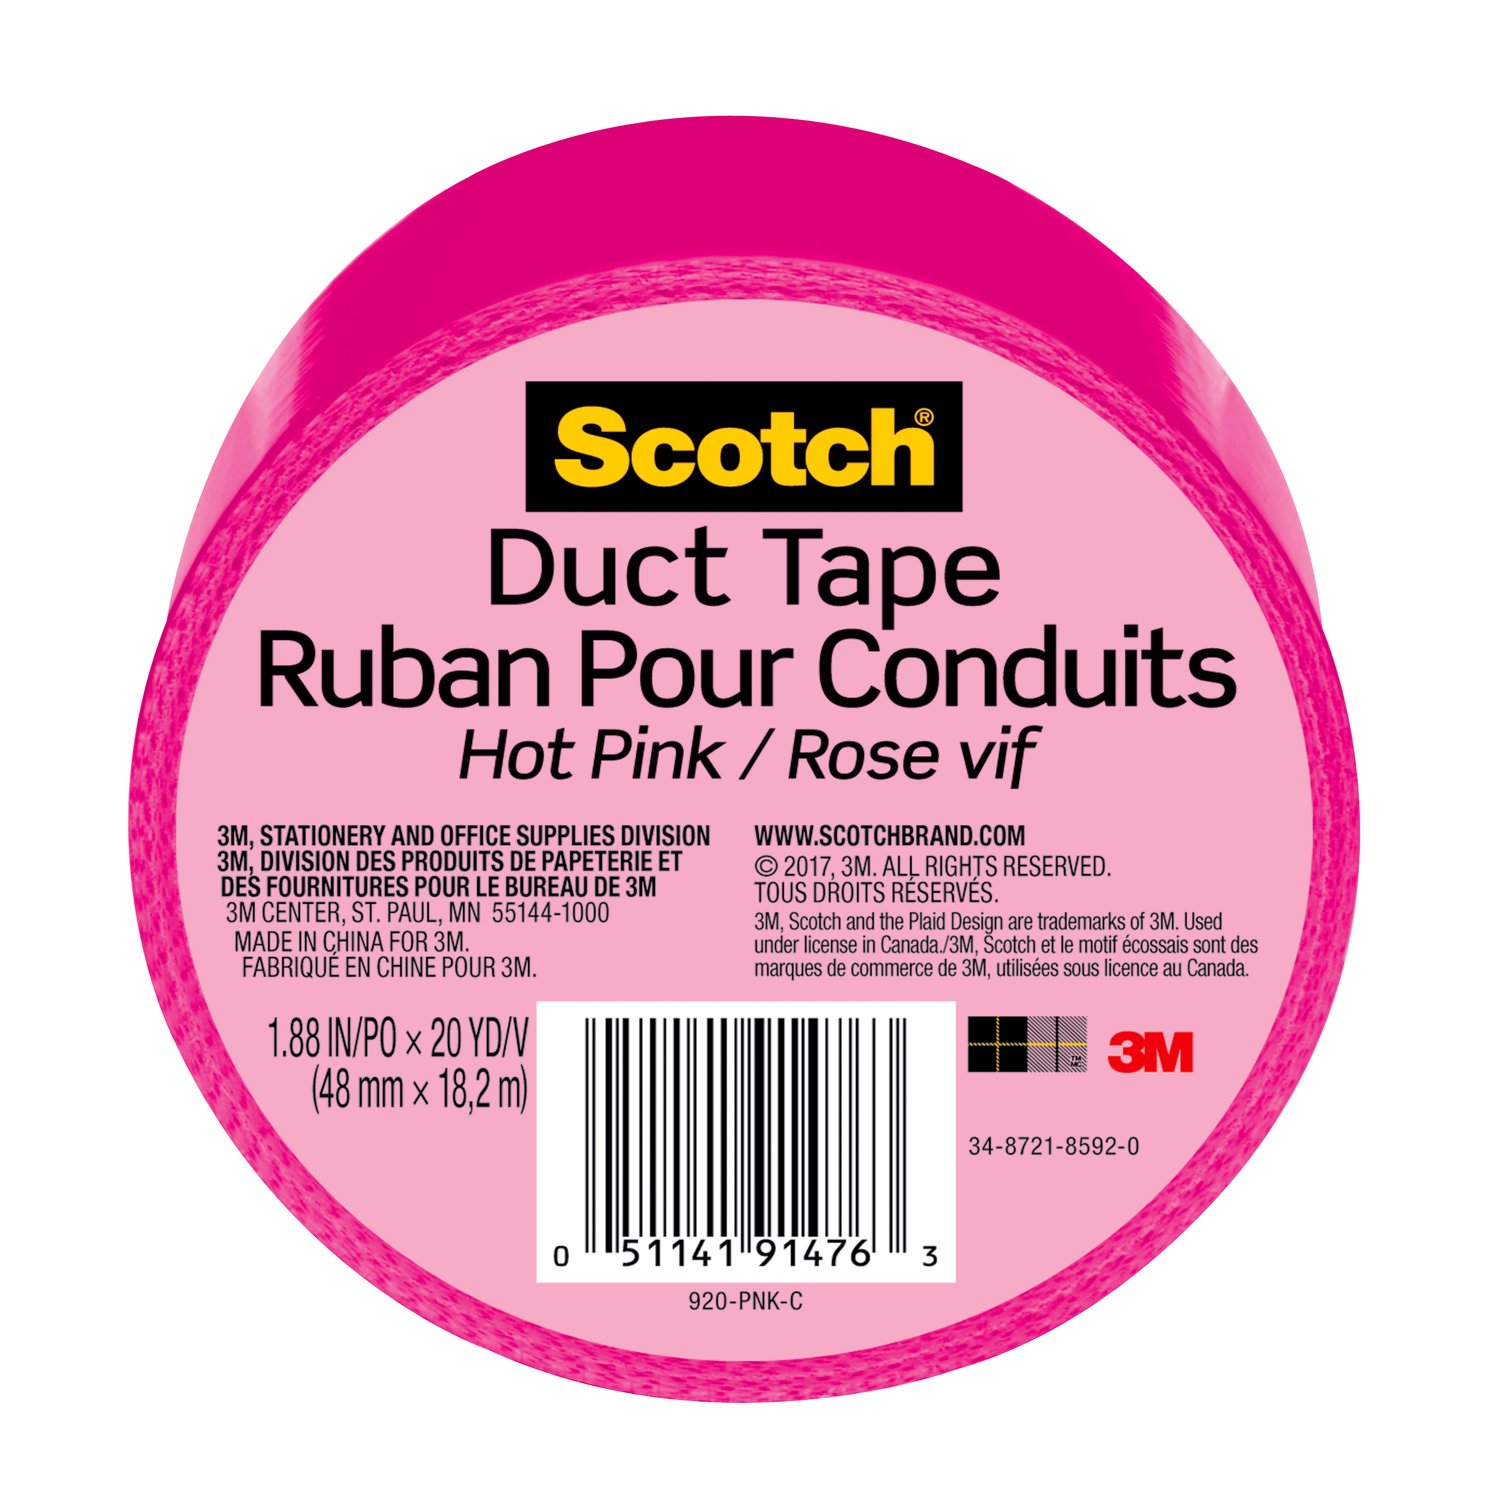 7100166668 - Scotch Duct Tape 920-PNK-C, 1.88 in x 20 yd (48 mm x 18,2 m), Pink